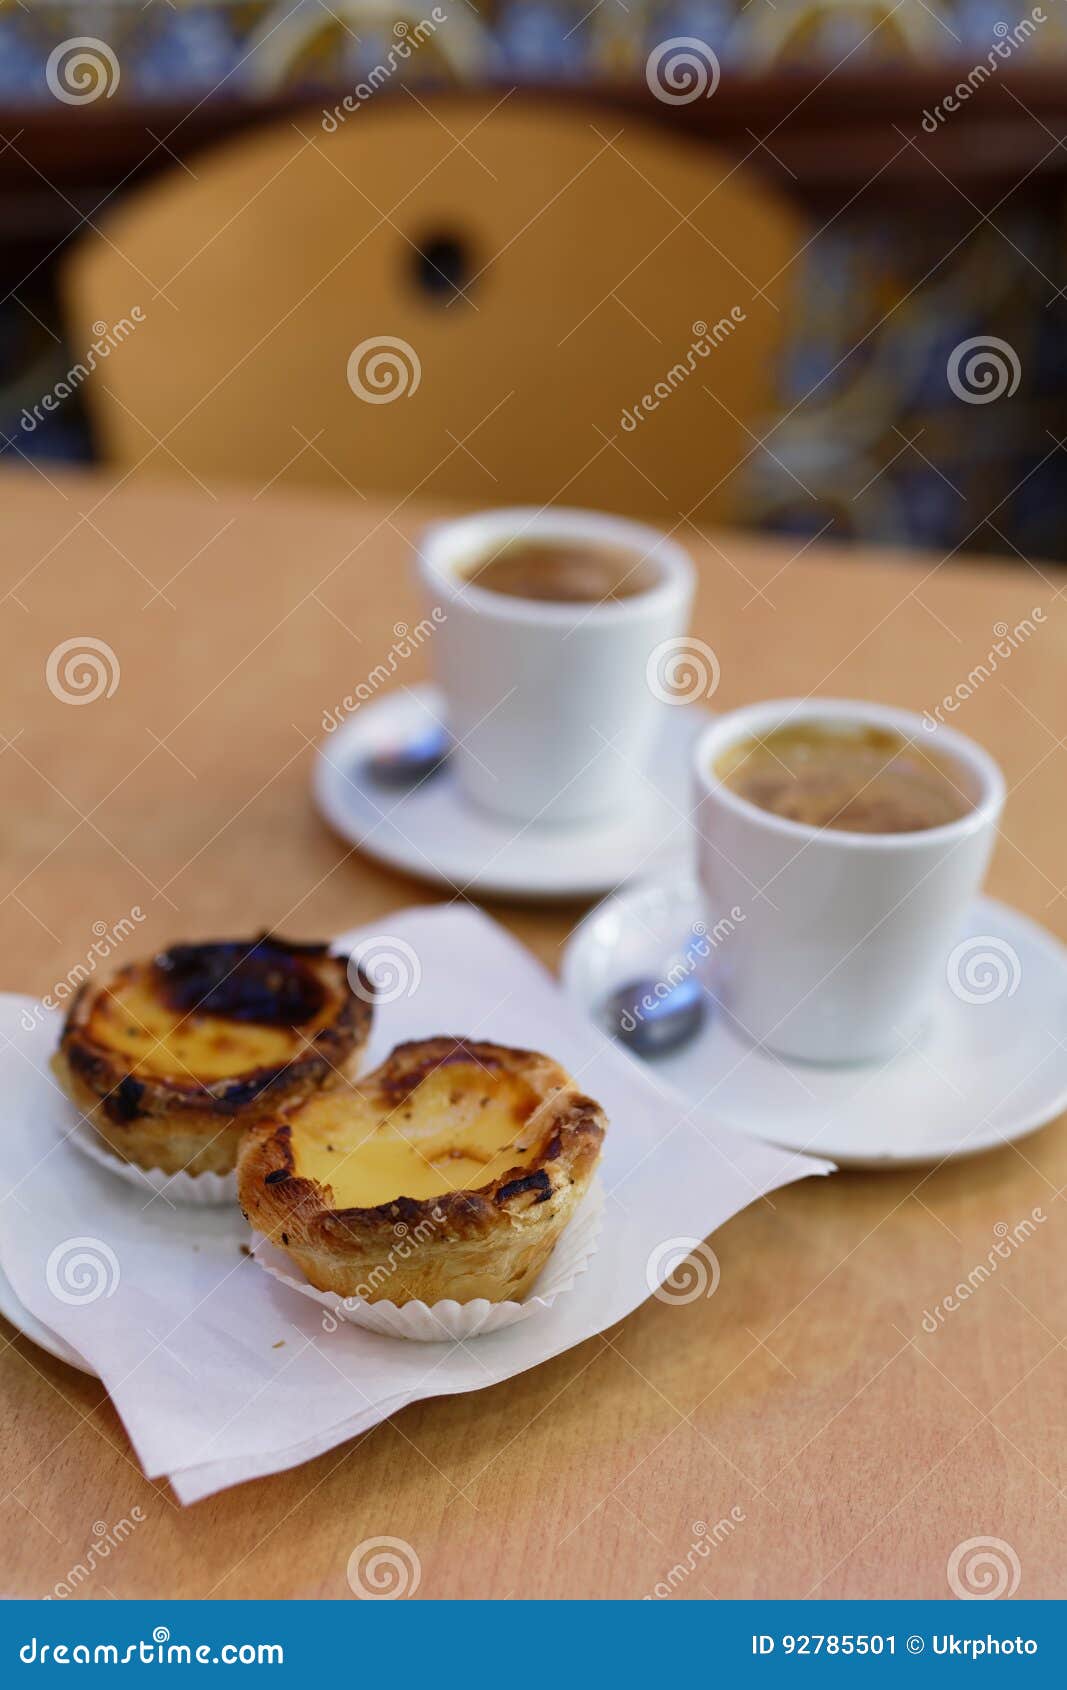 pastel de nata and coffee